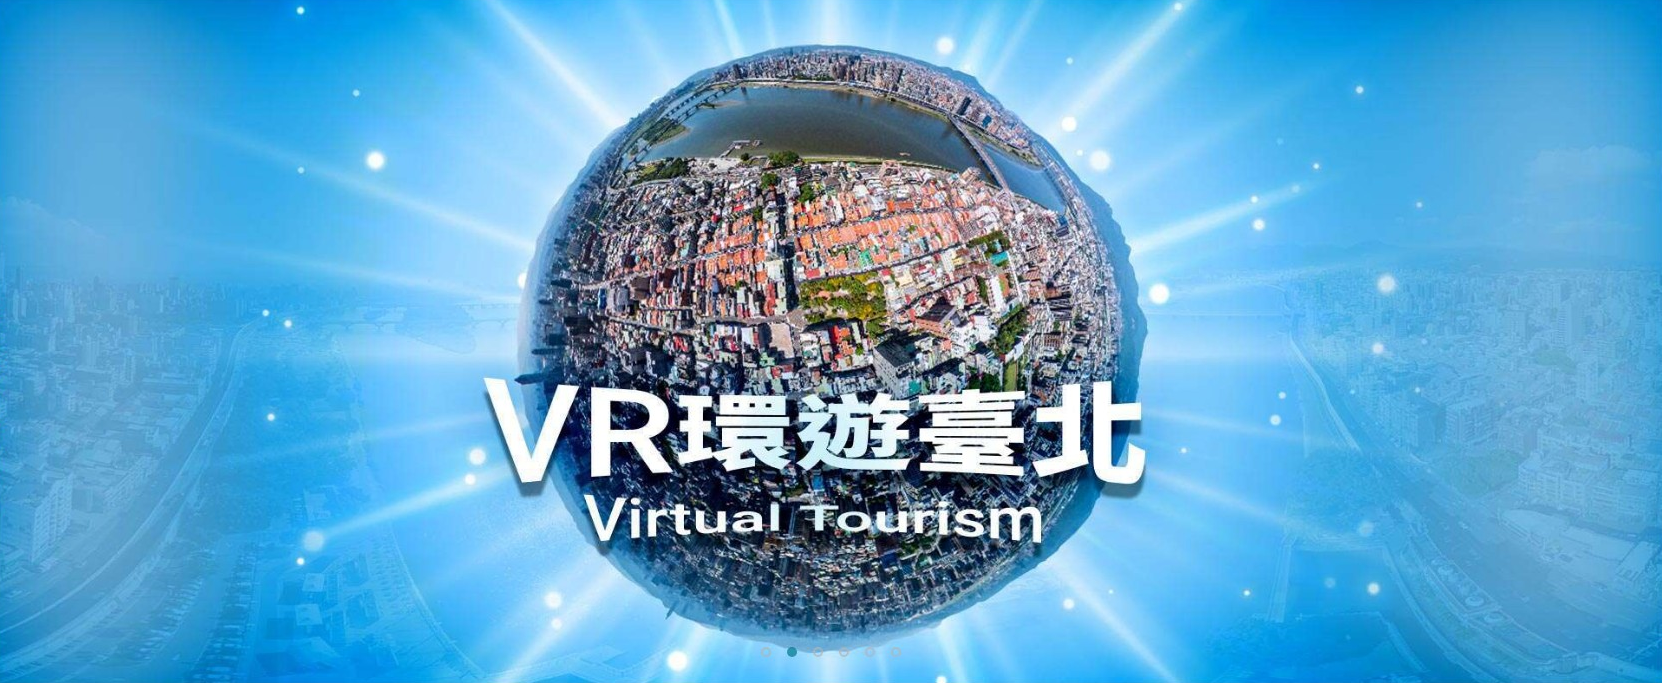 Virtual Tourism